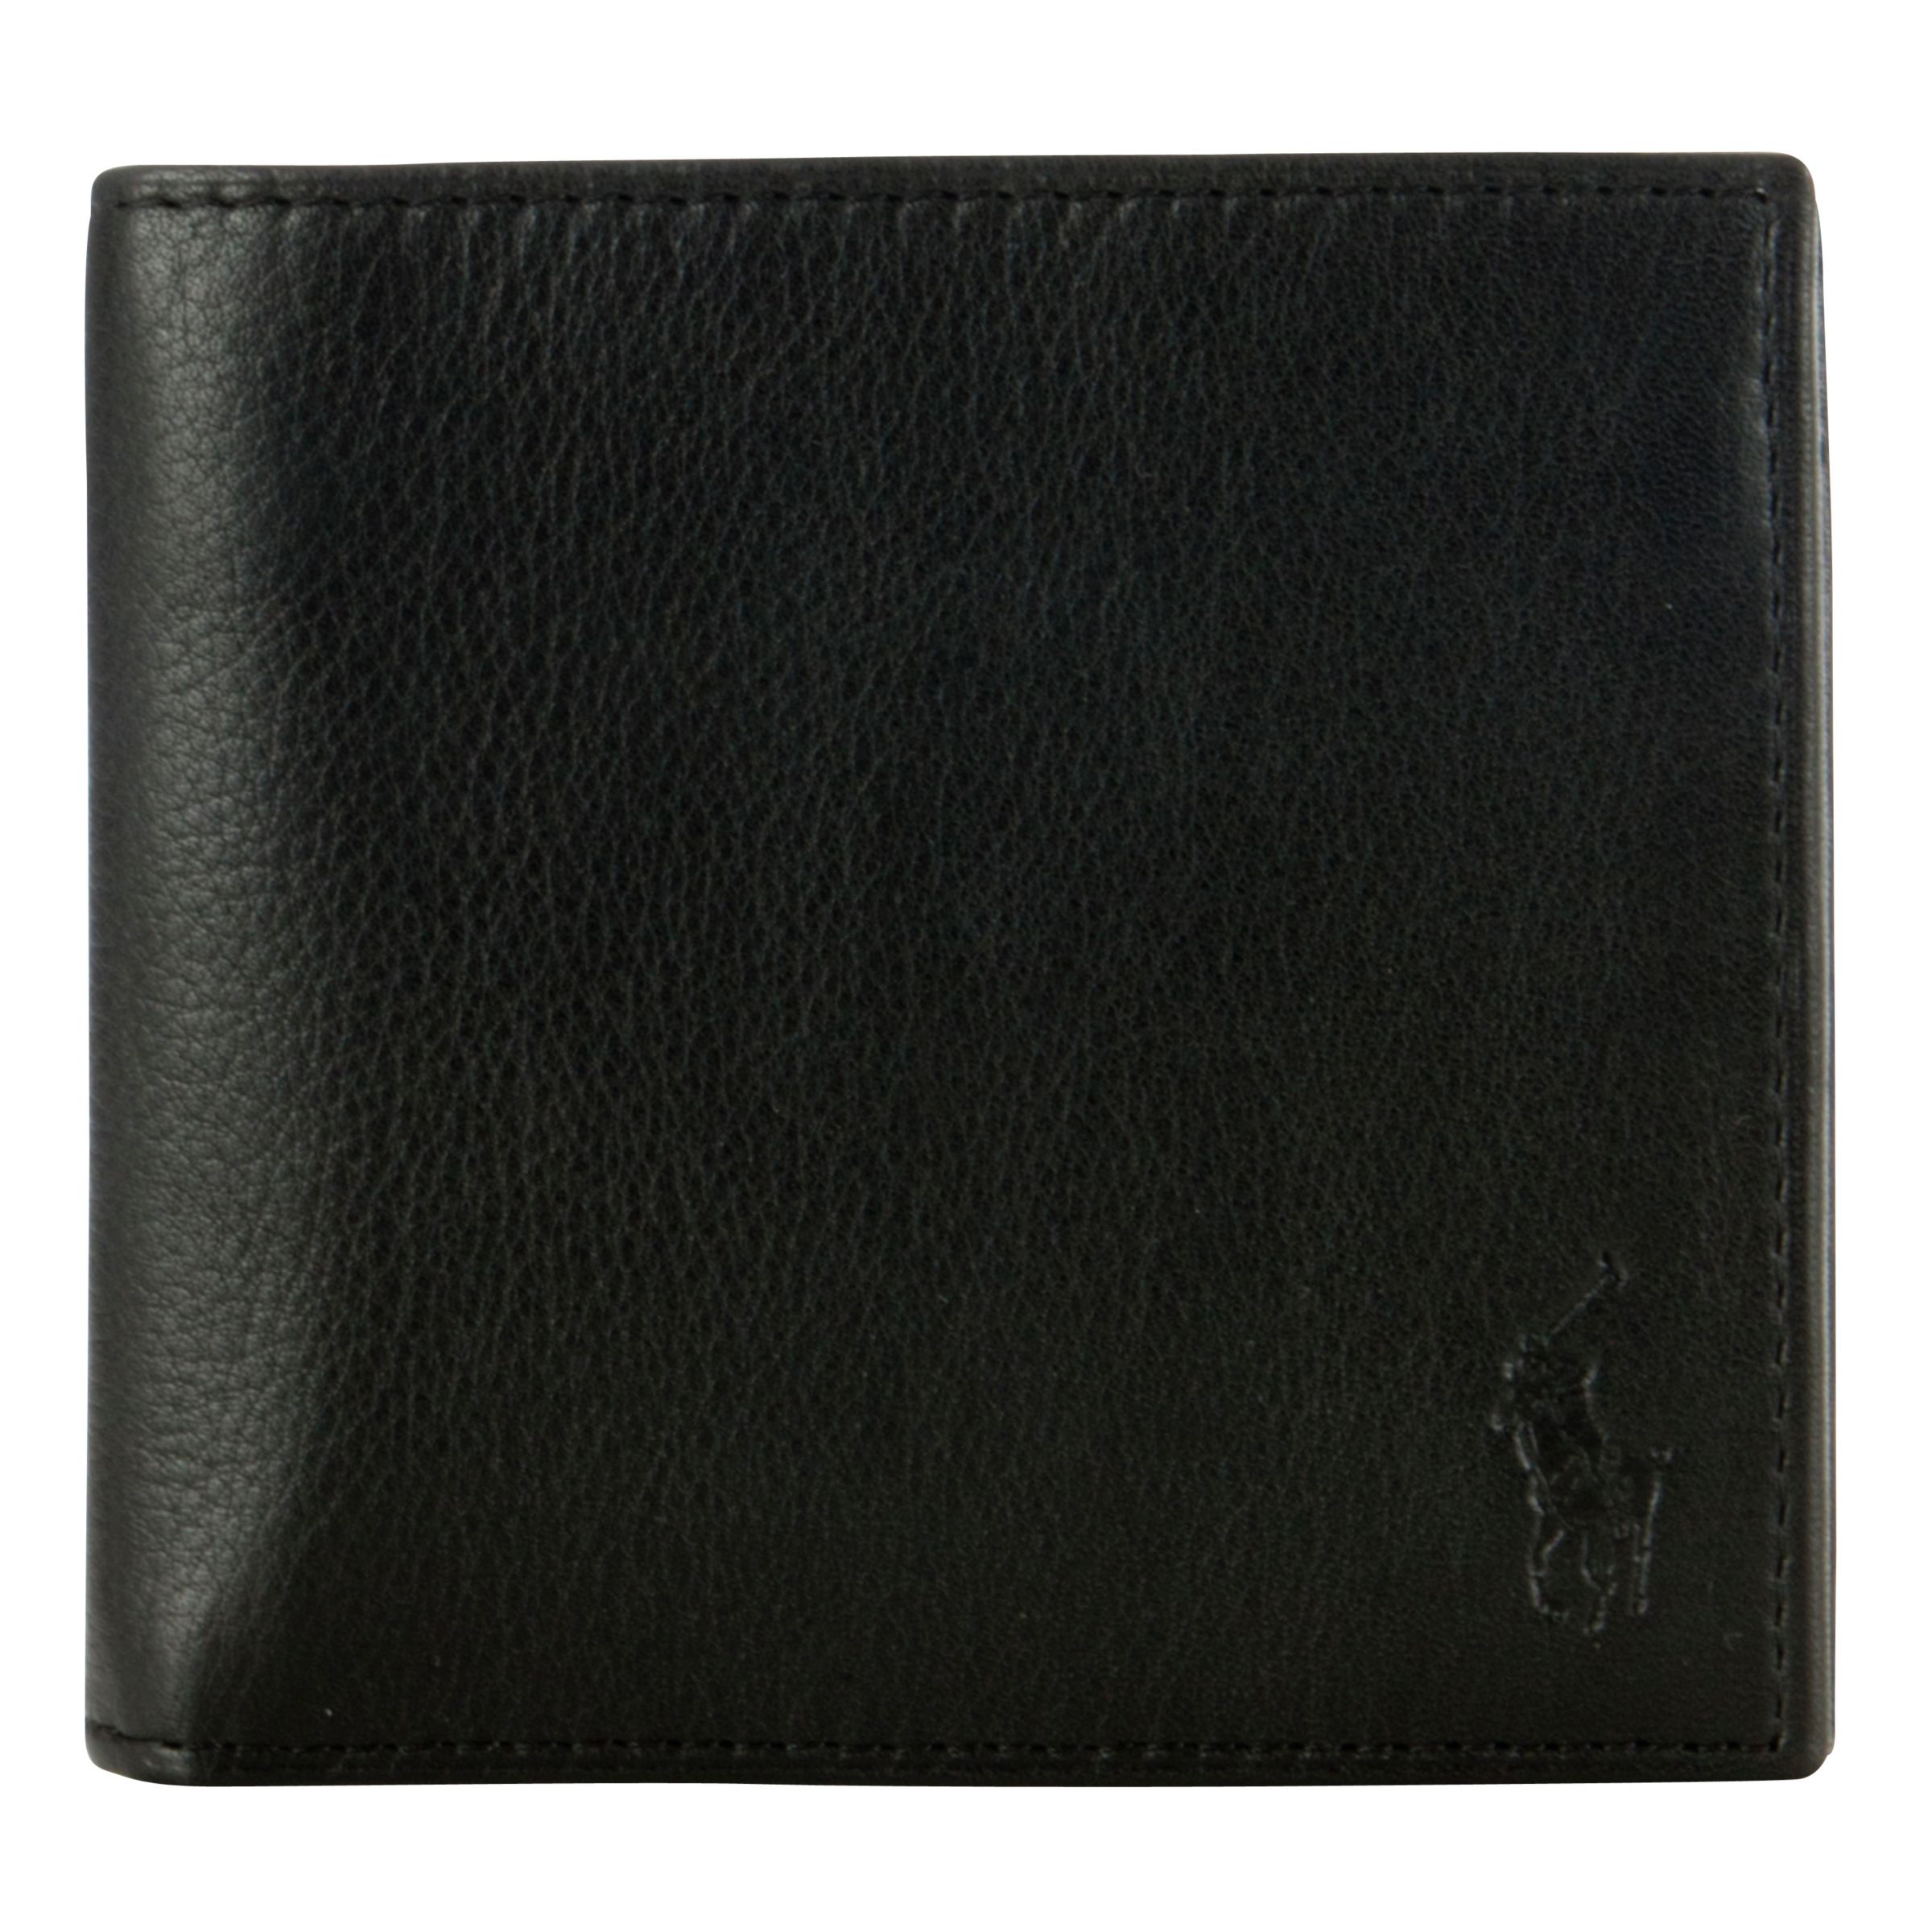 Polo Ralph Lauren Pebble Leather Wallet